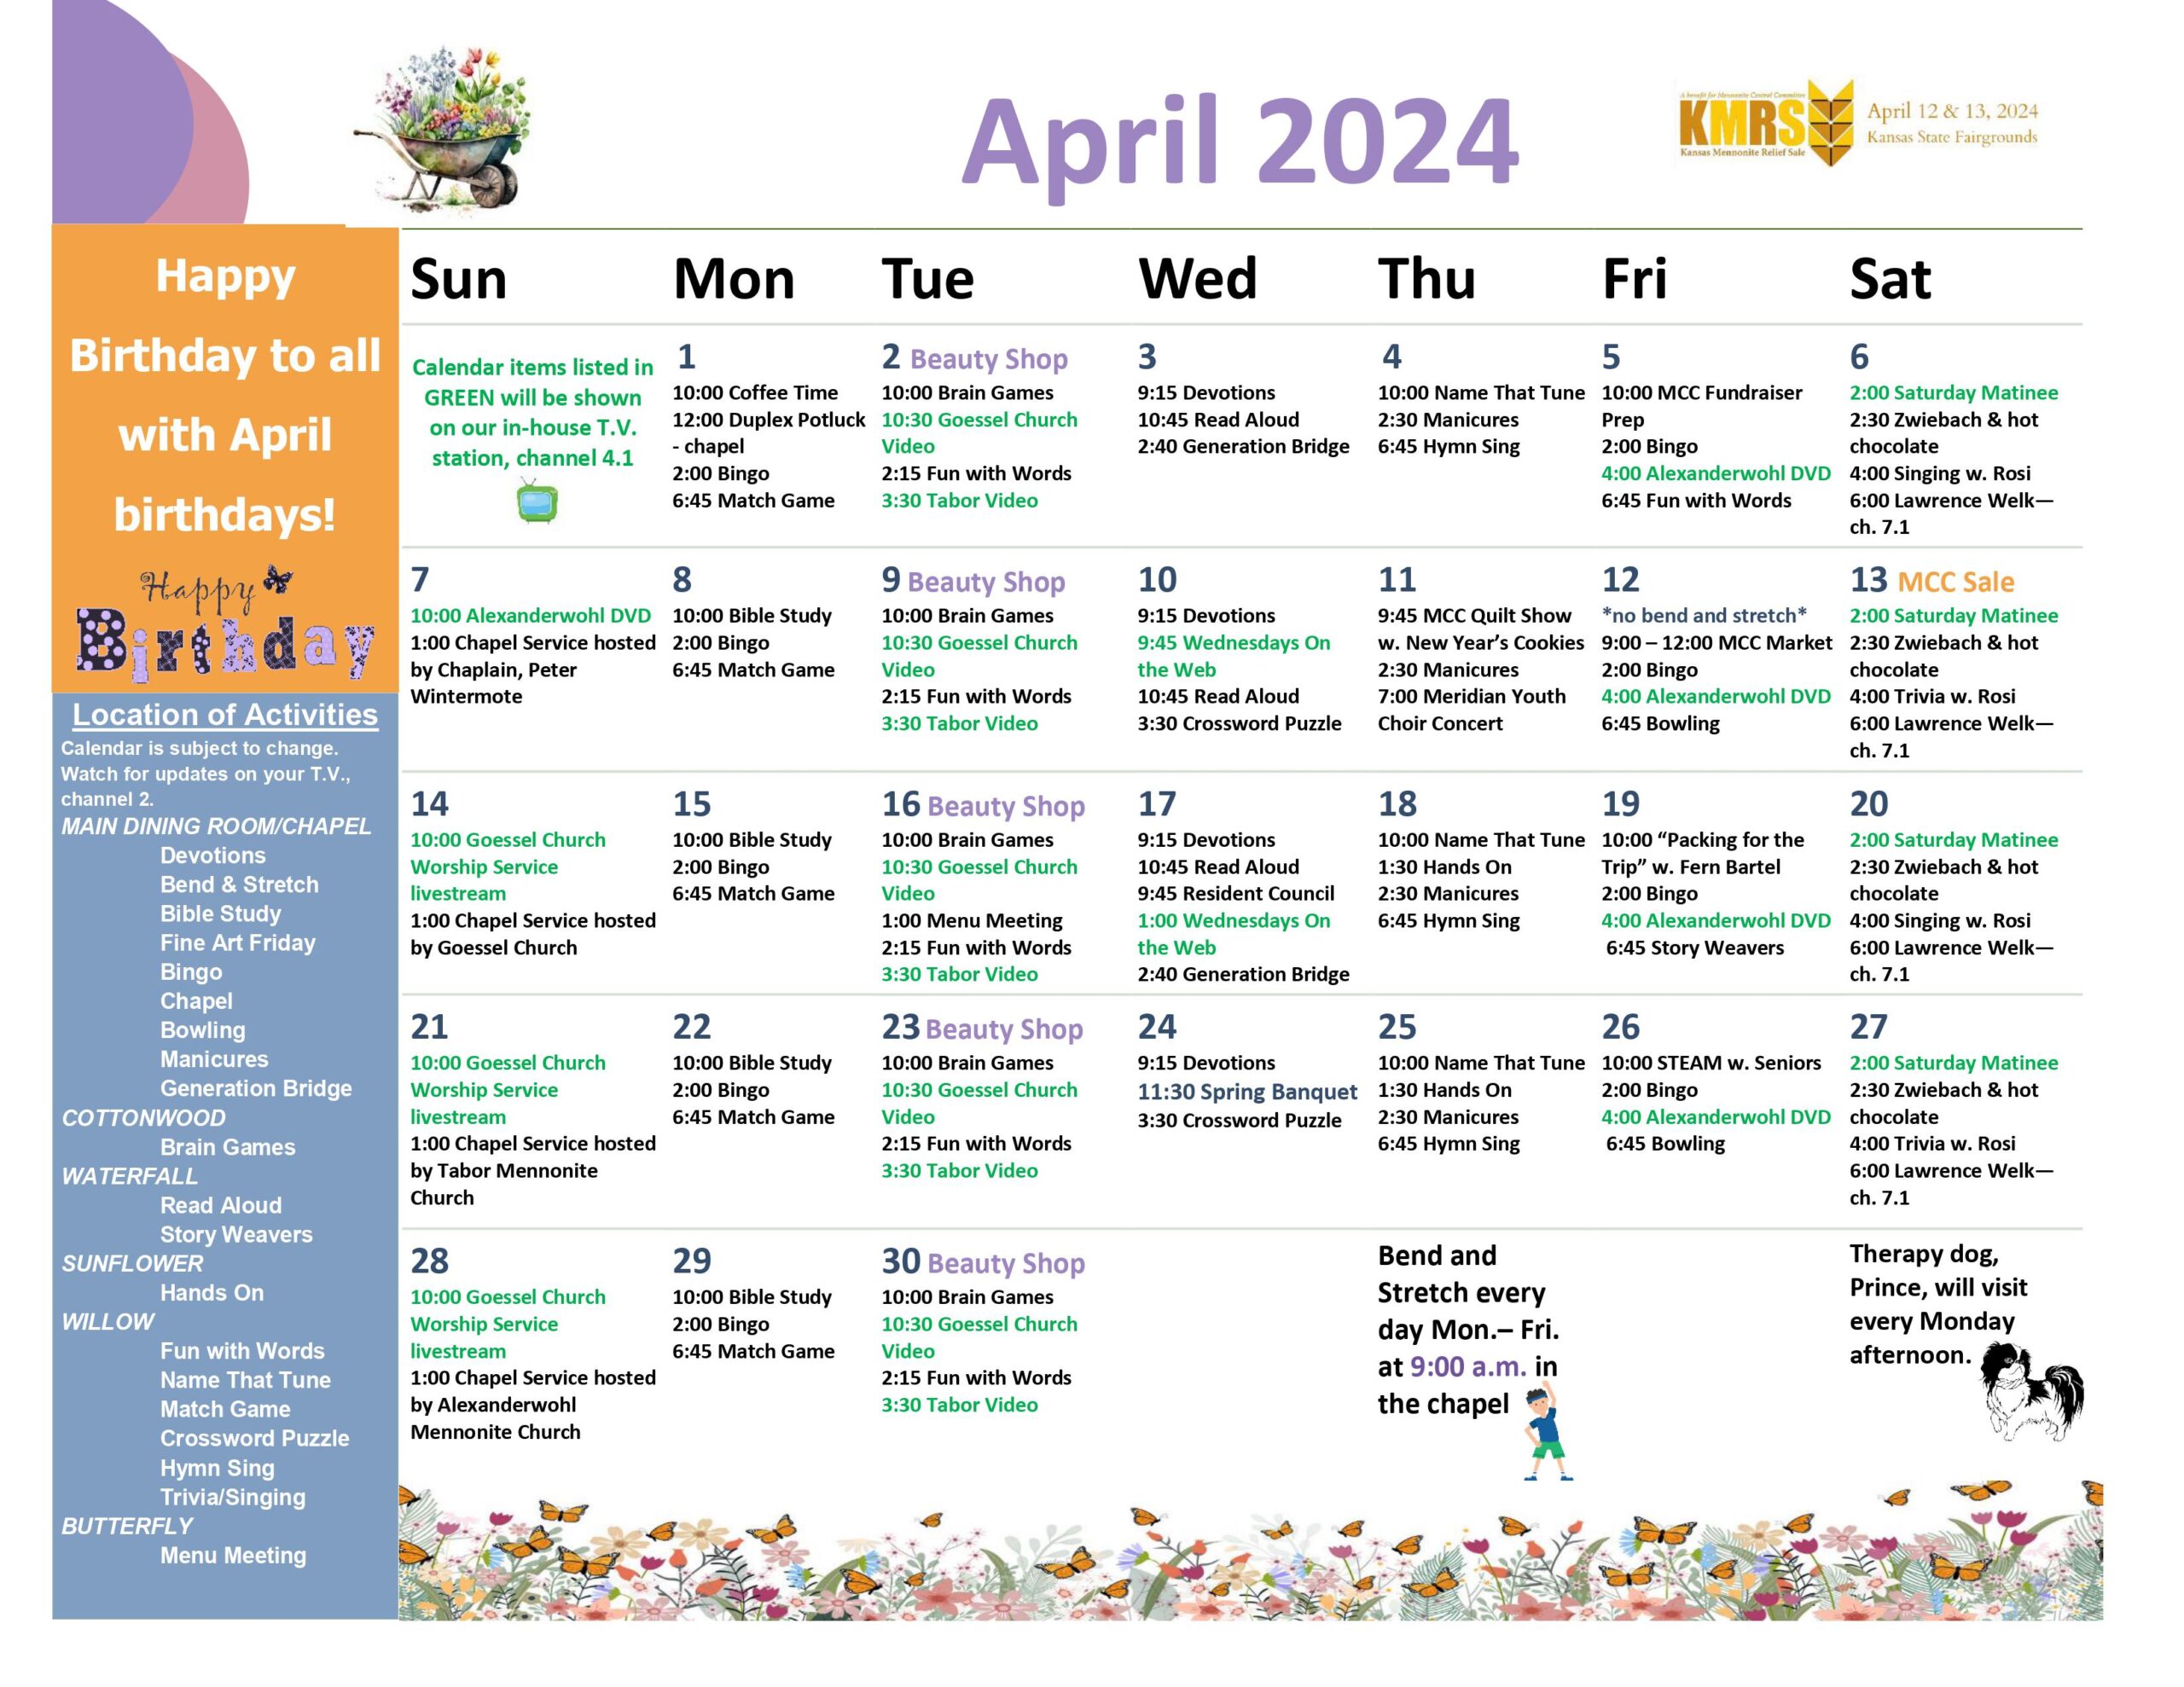 April 2024 activity calendar